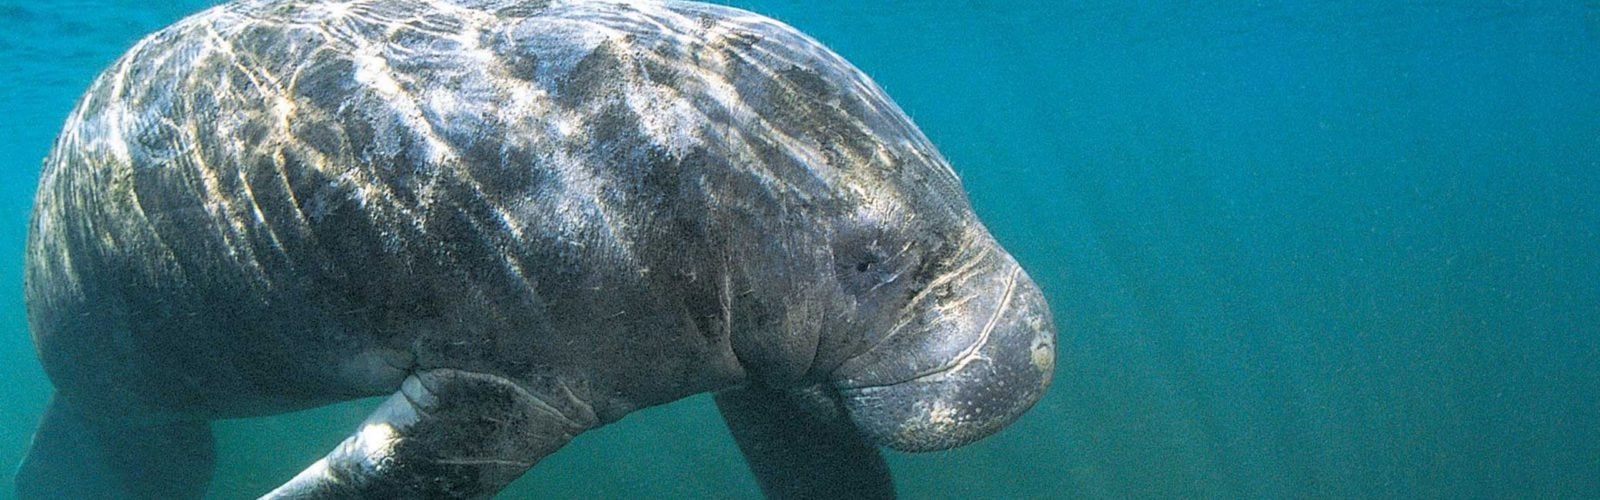 dugong-sea